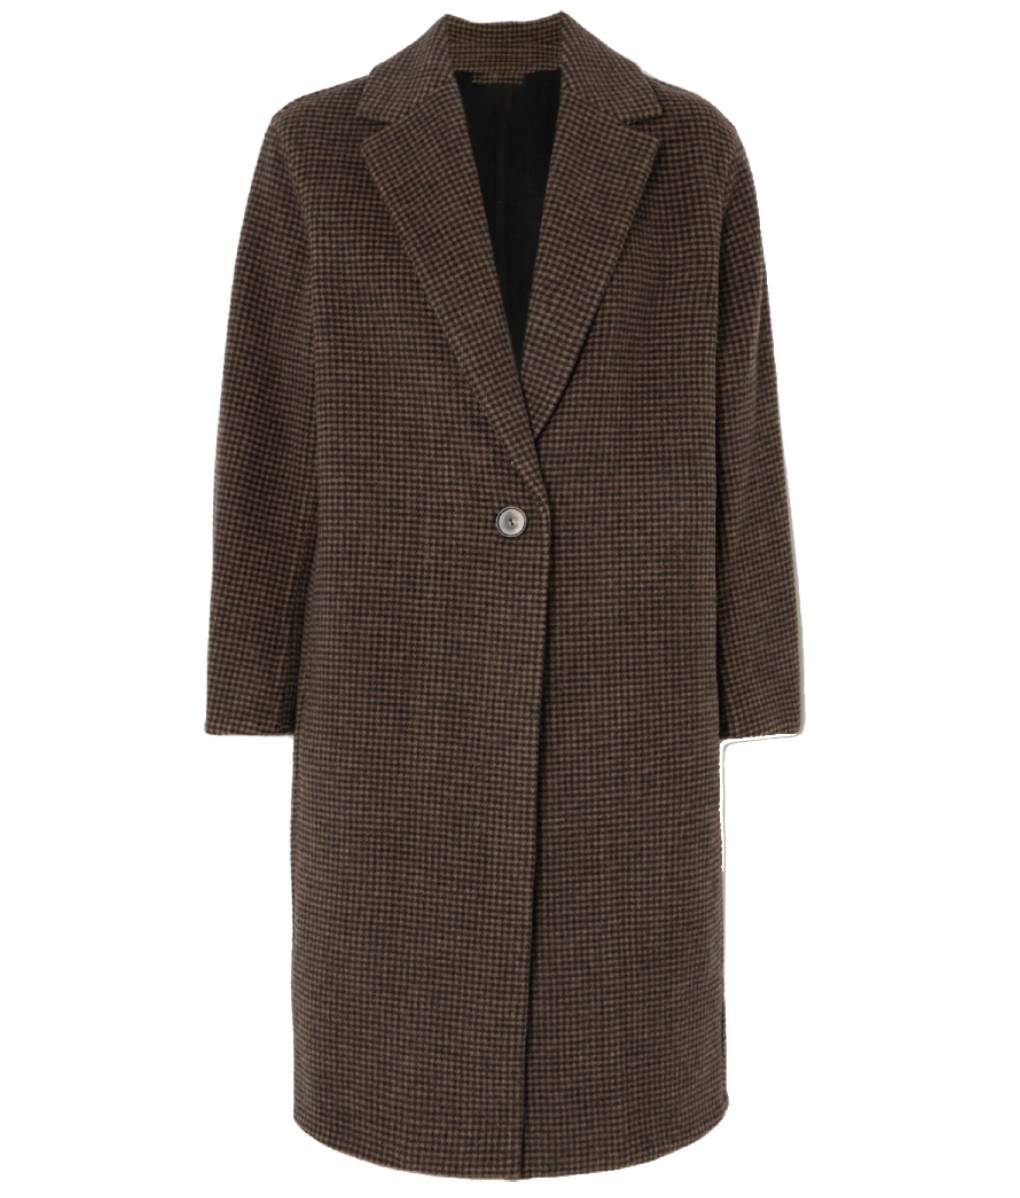 Taylor Swrift Brown Coat (1)